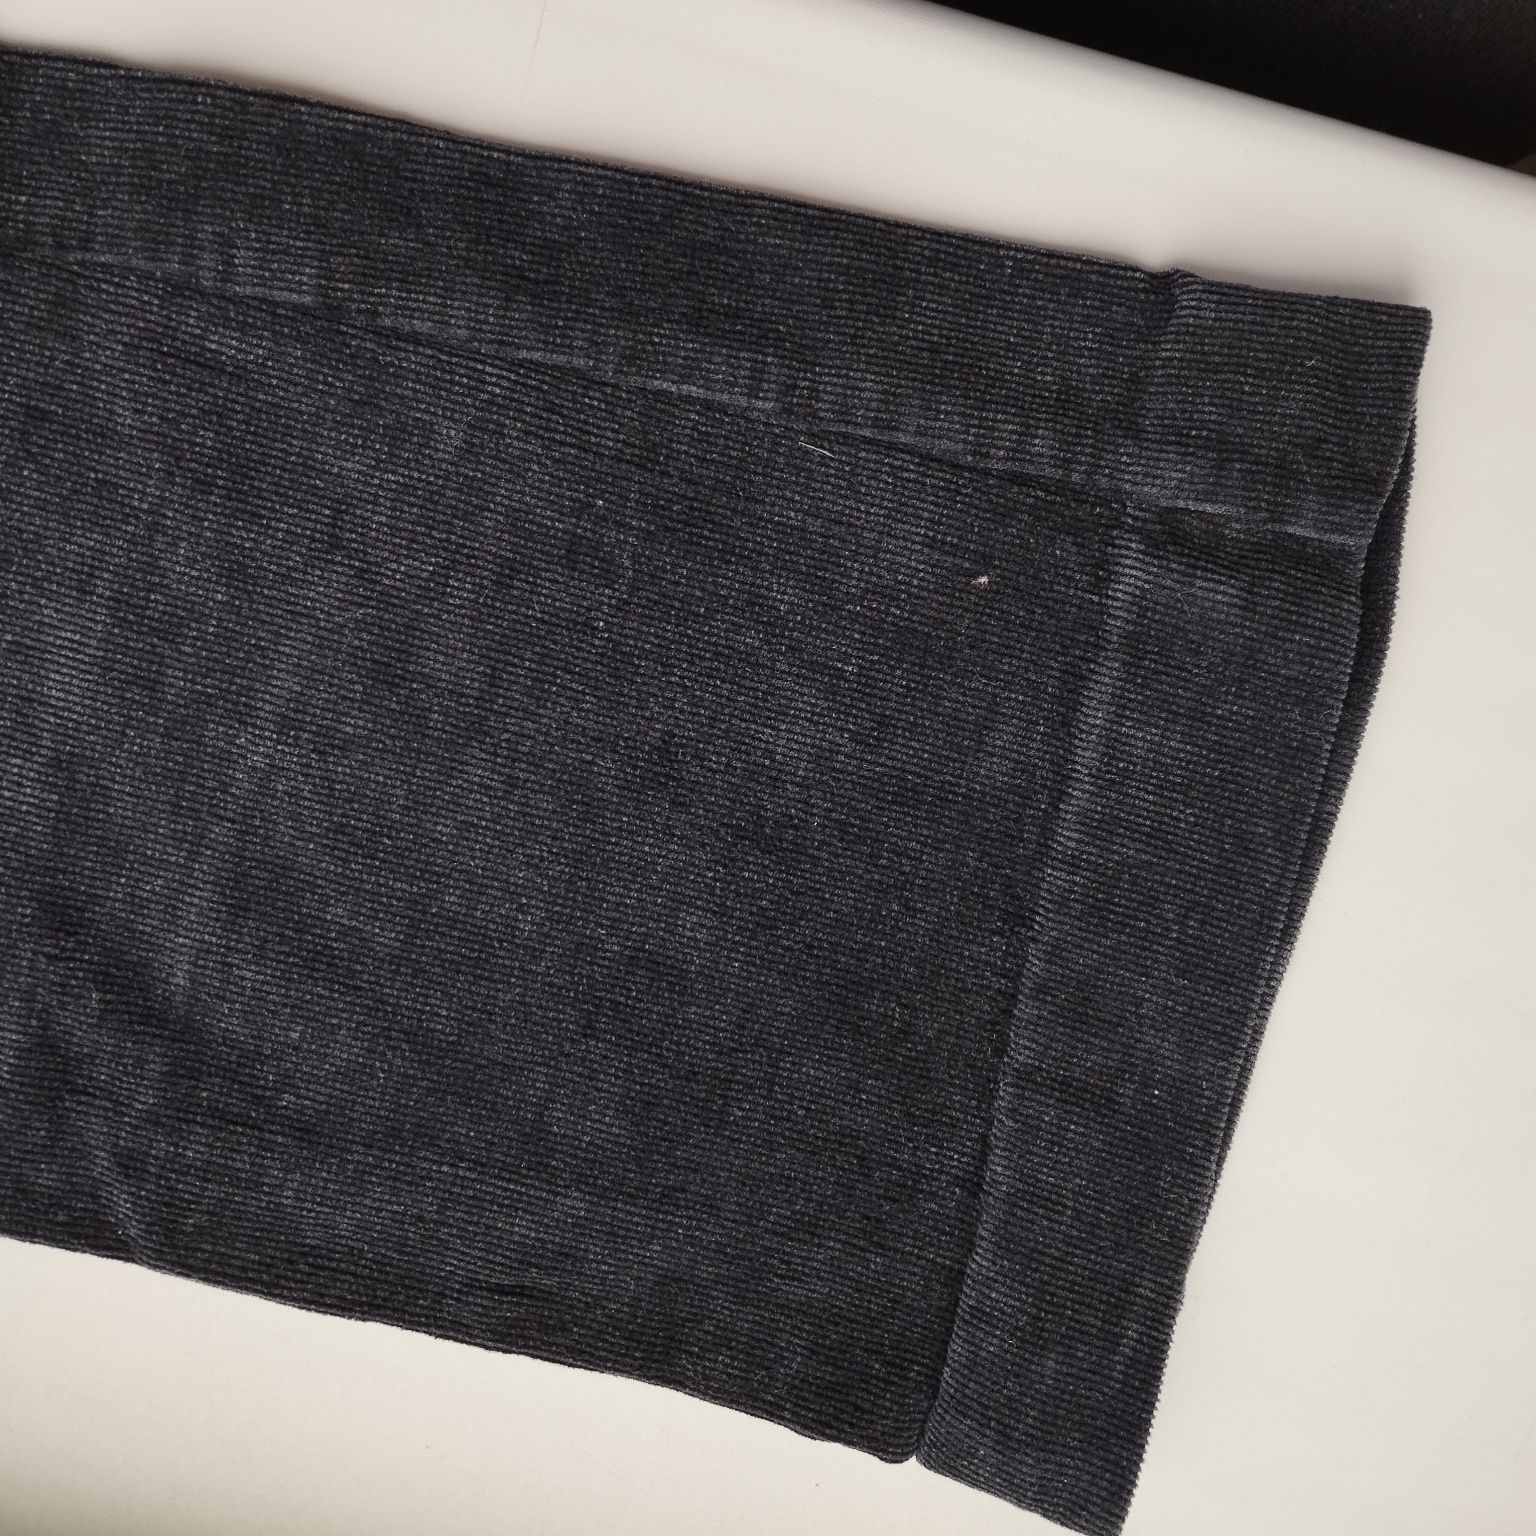 Вельветовые штаны для беременных s (80-88)